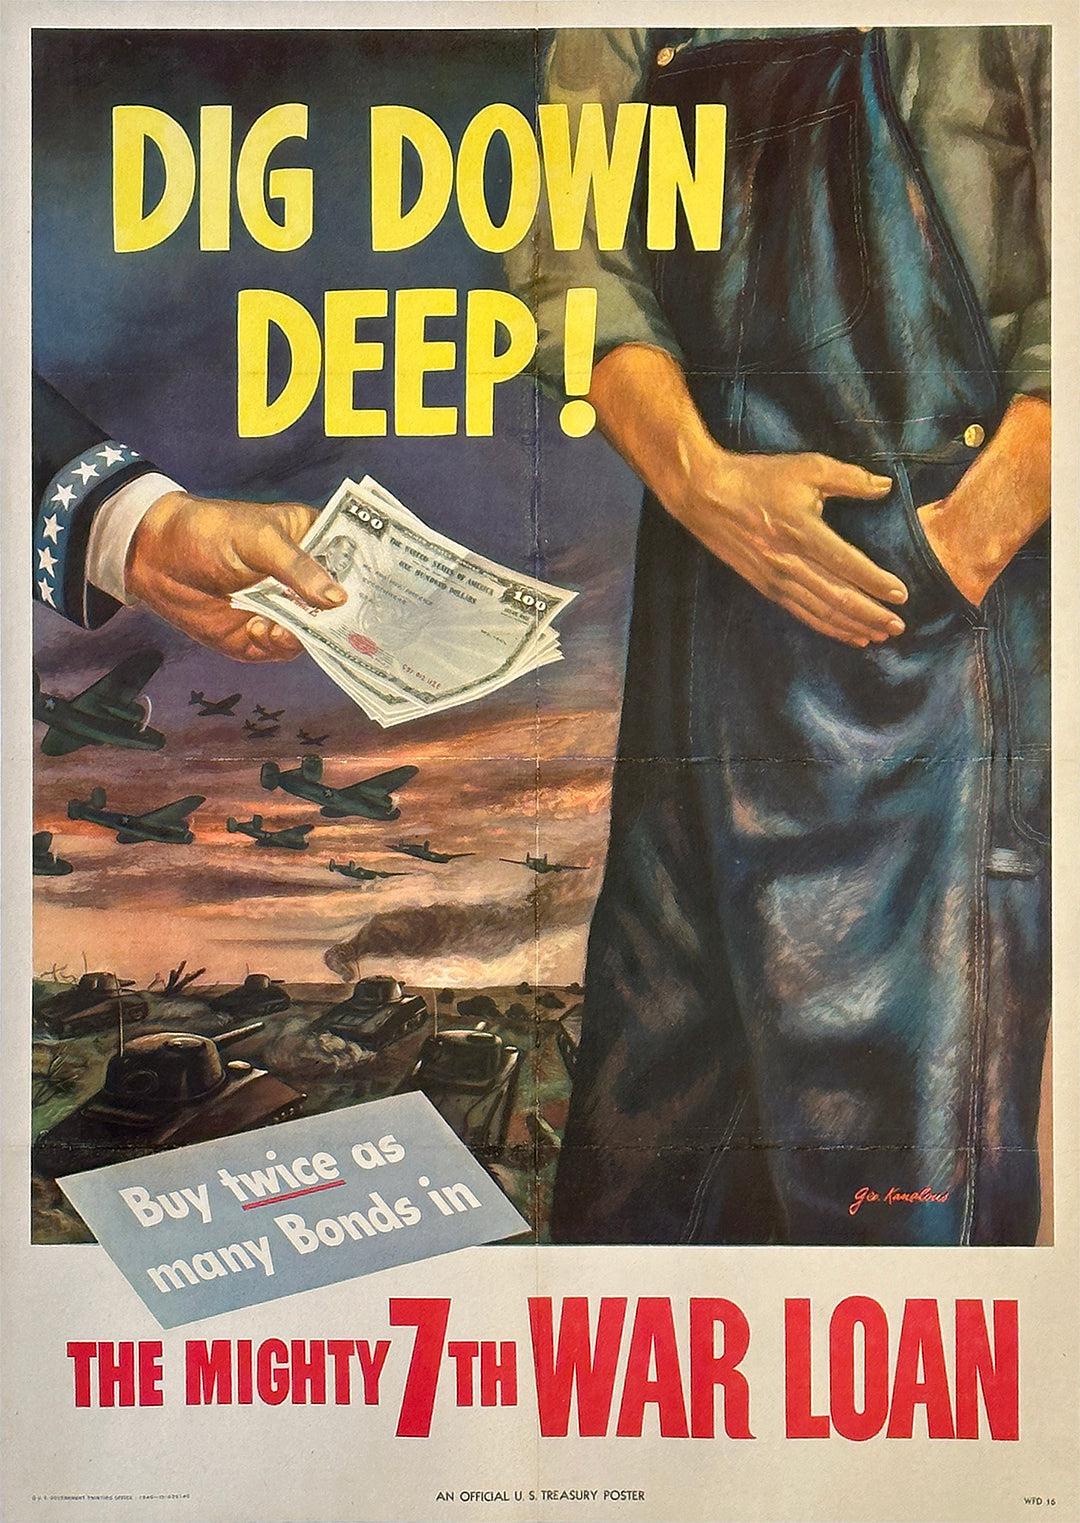 Original Vintage WWII Dig Down Deep Poster by Kanelous 1945 7th War Loan